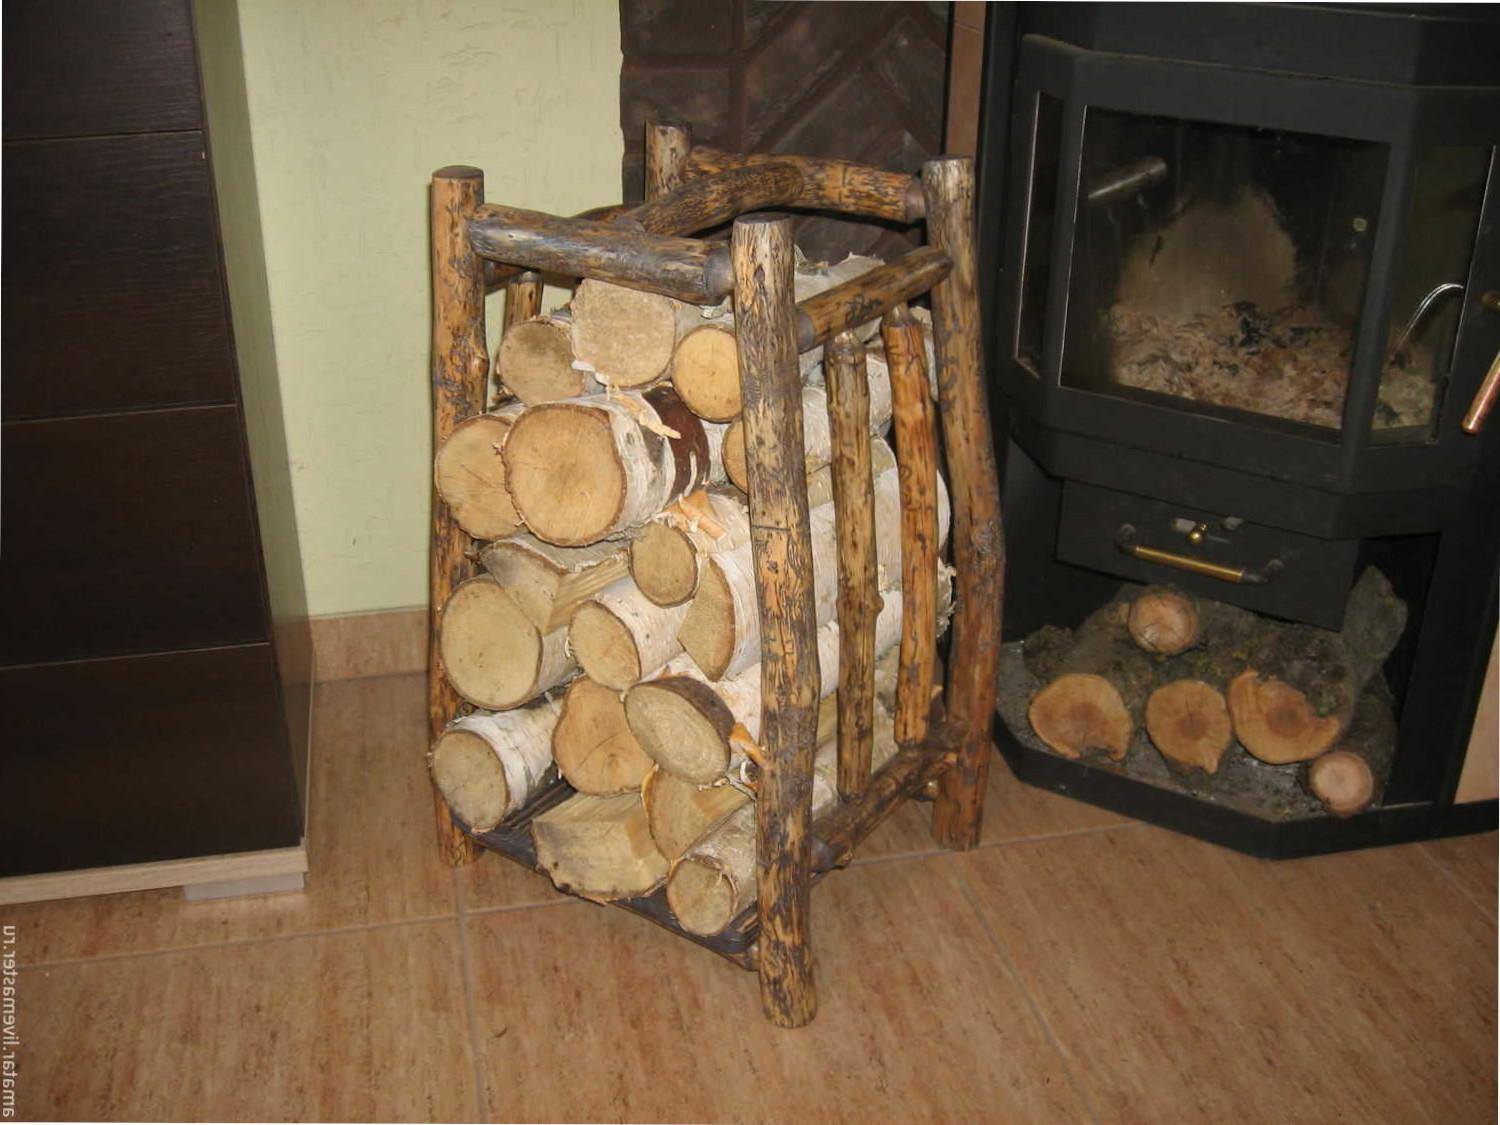 Woodpile made of wood